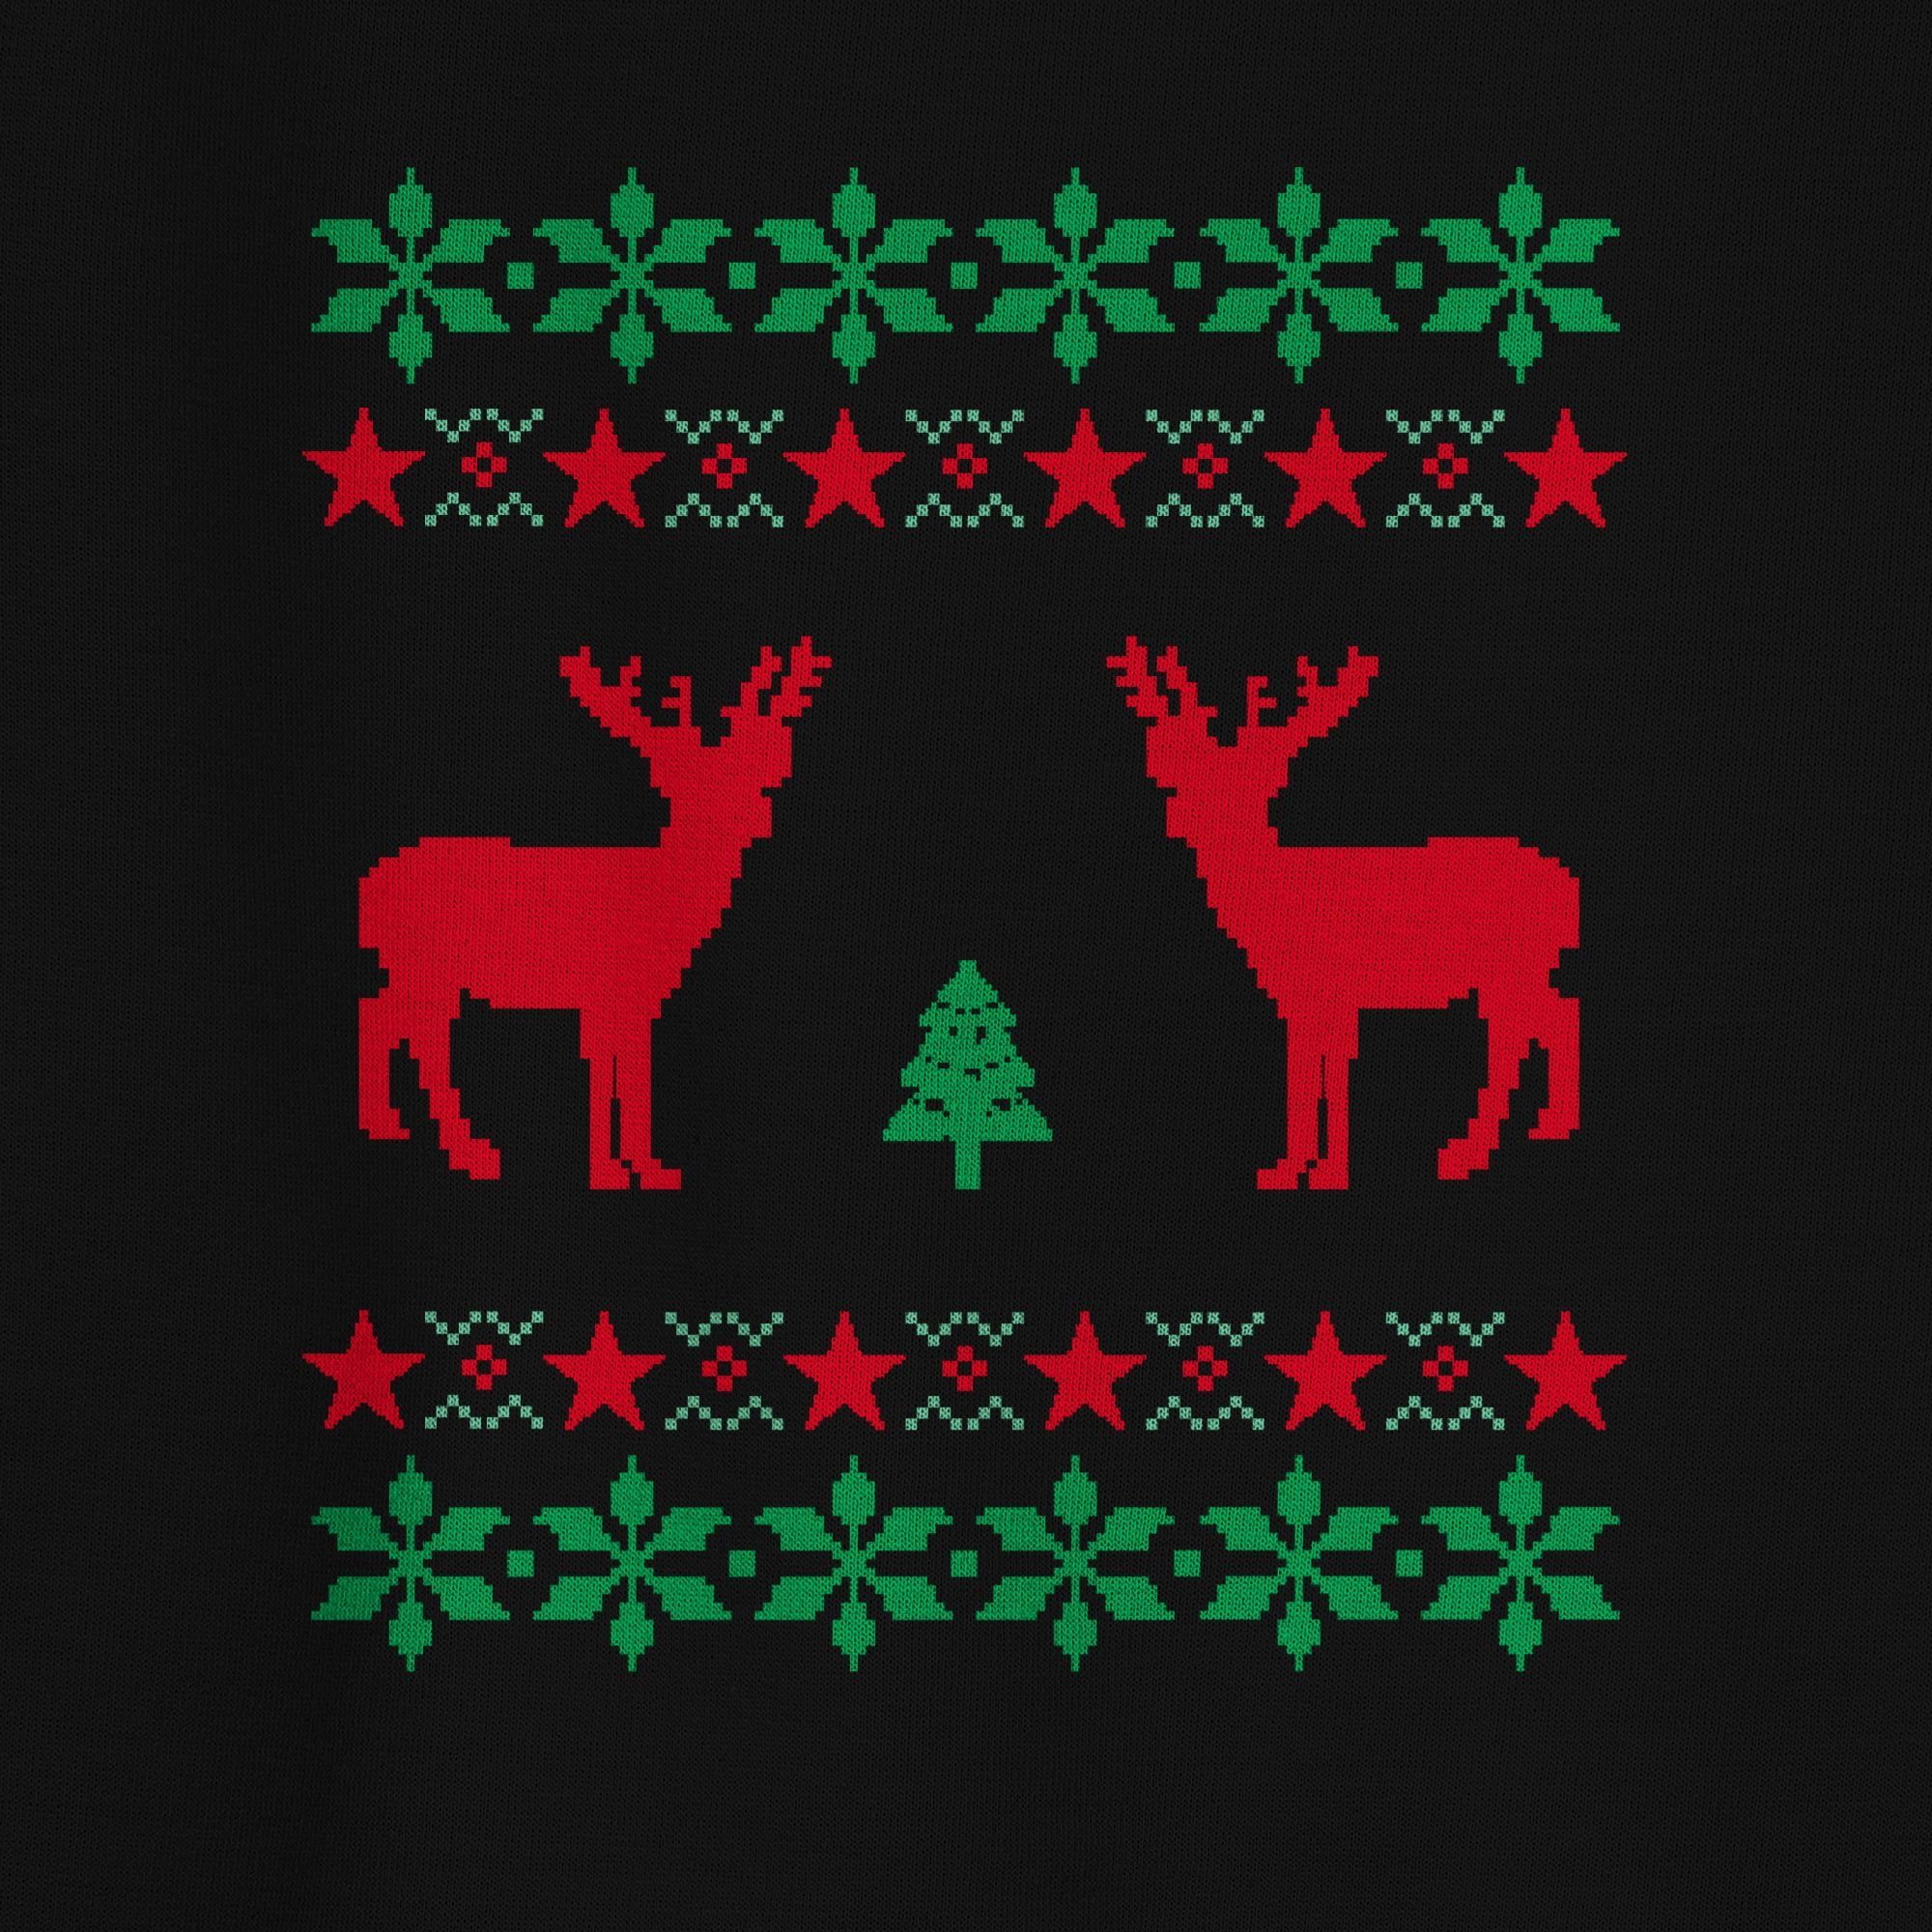 1 Weihachten Shirtracer Pixel (1-tlg) Schwarz Kleidung Norweger Weihnachten Sweatshirt Rentier